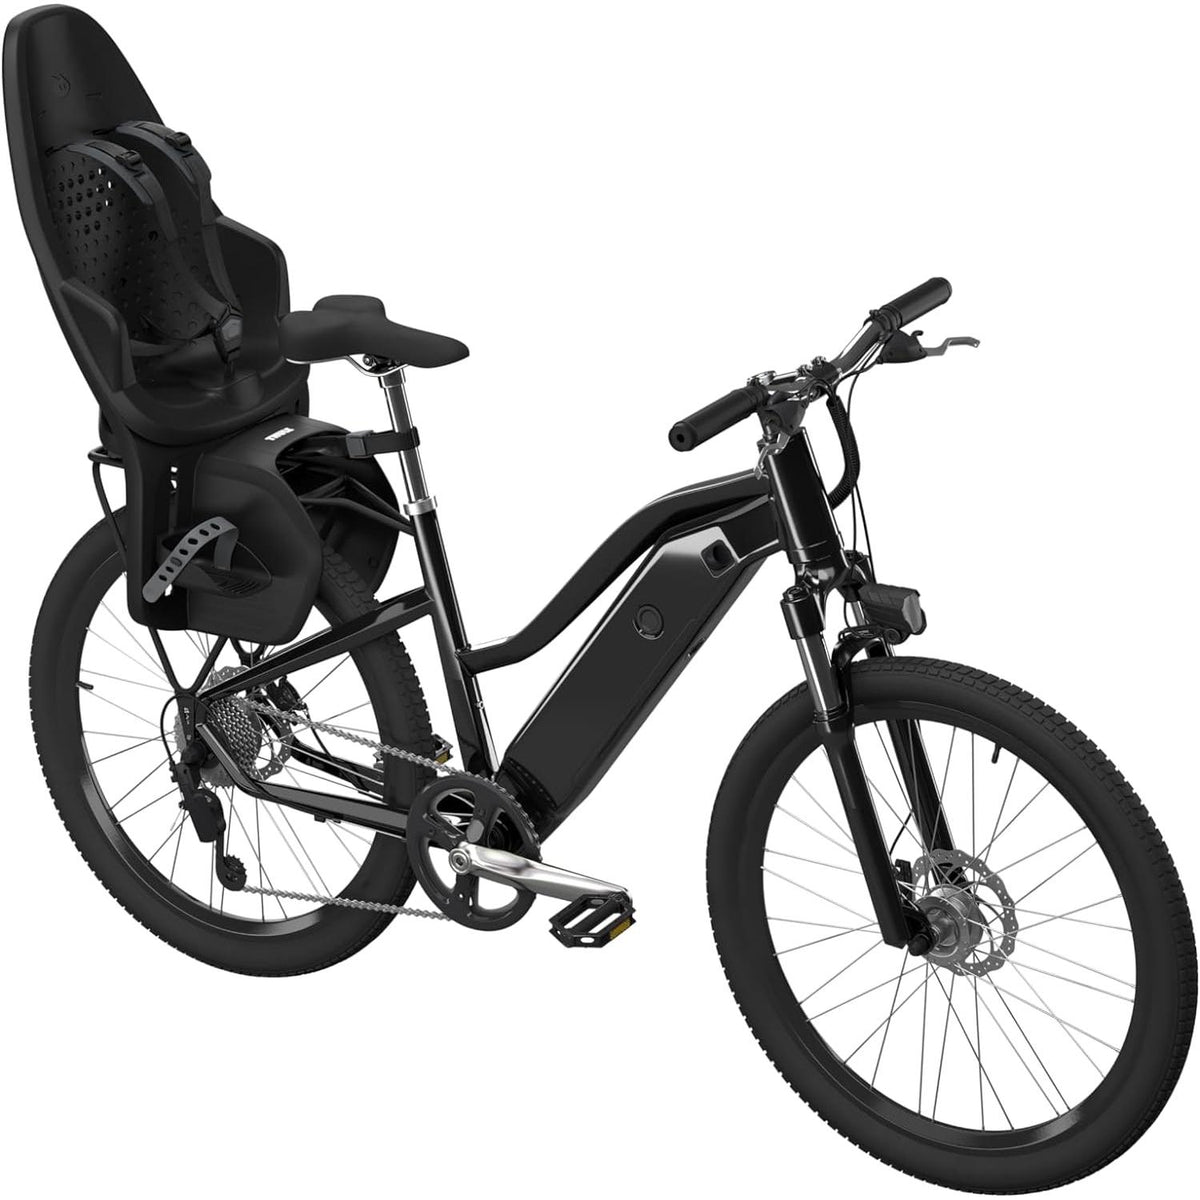 Thule Yepp 2 MIK HD Rack Mounted Child Bike Seat